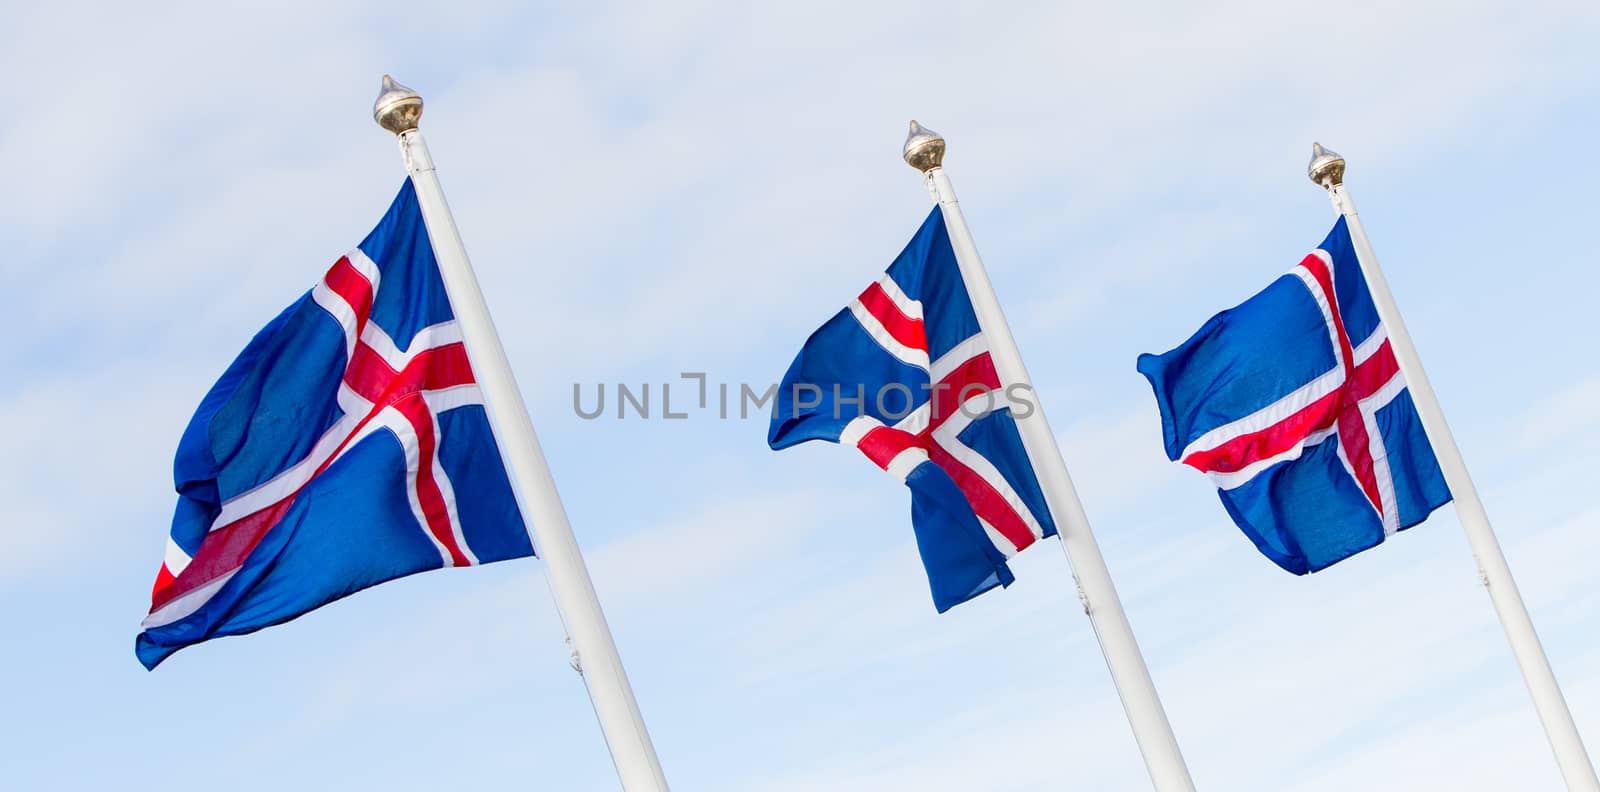 Iceland flag - flag of Iceland - Icelandic flag